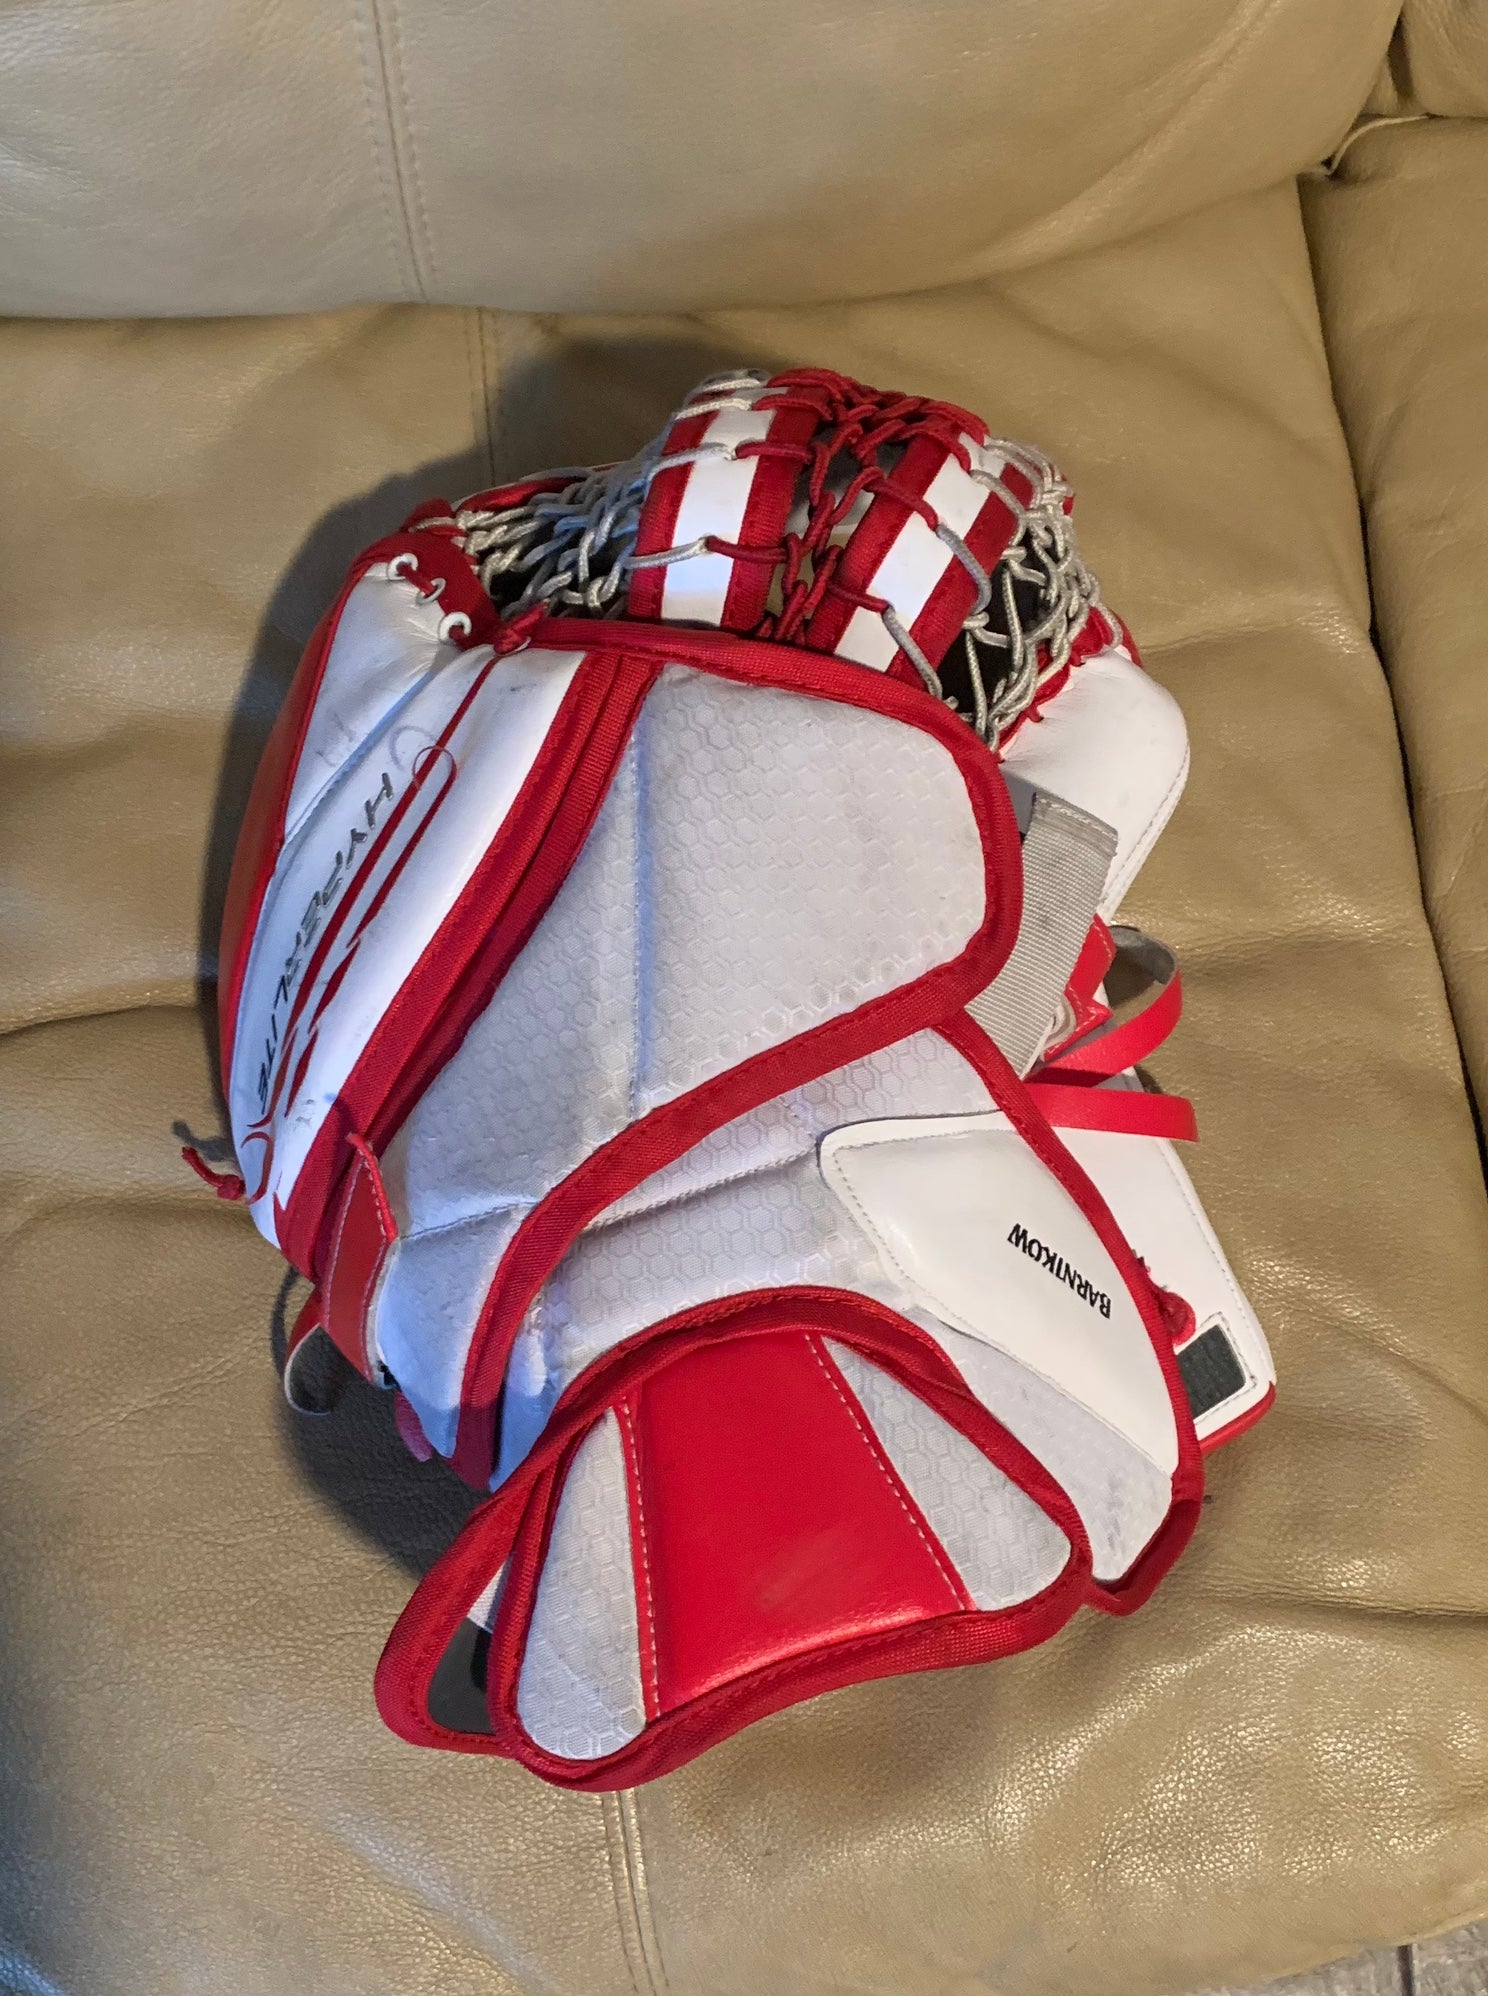 Bauer Supreme Ultrasonic - New Pro Stock Goalie Glove - (White/Red